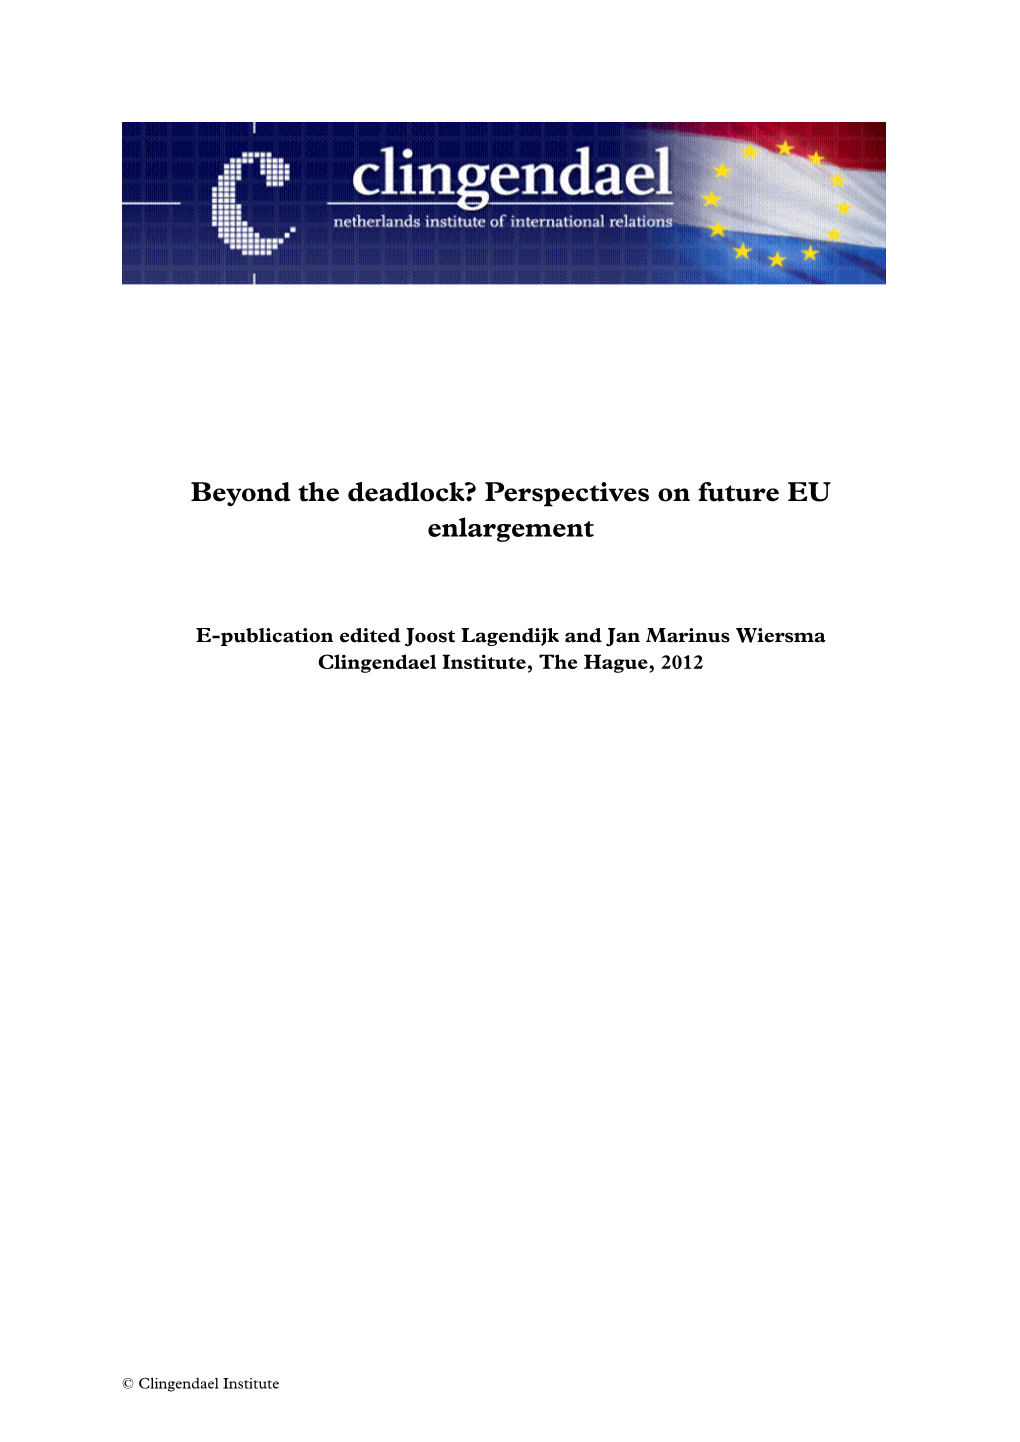 Beyond the Deadlock? Perspectives on Future EU Enlargement